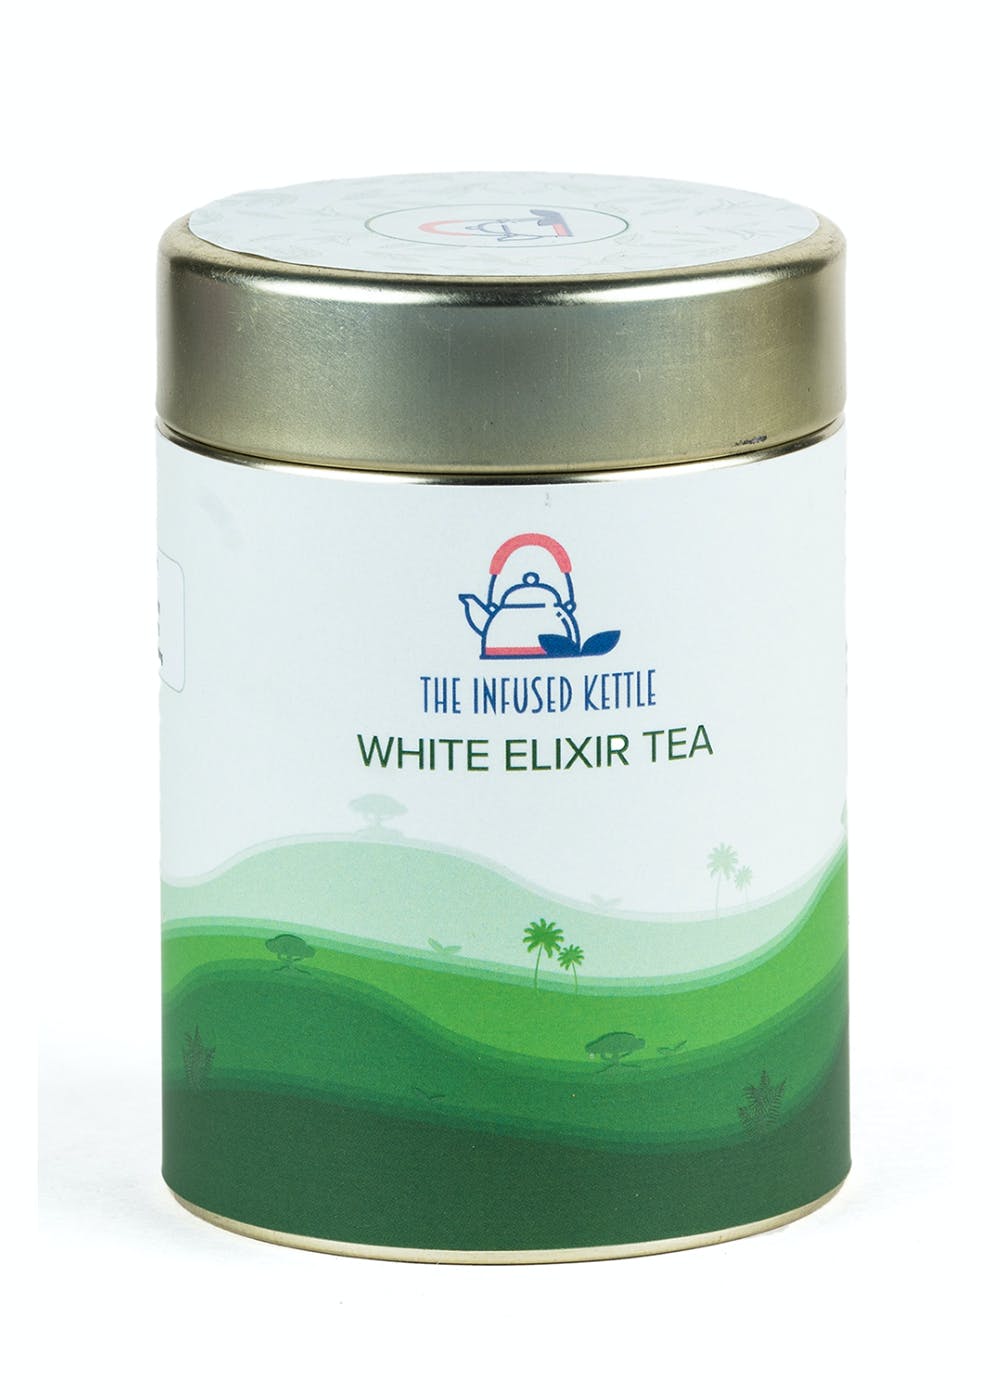 White Elixir Tea - Tea leaves and Buds